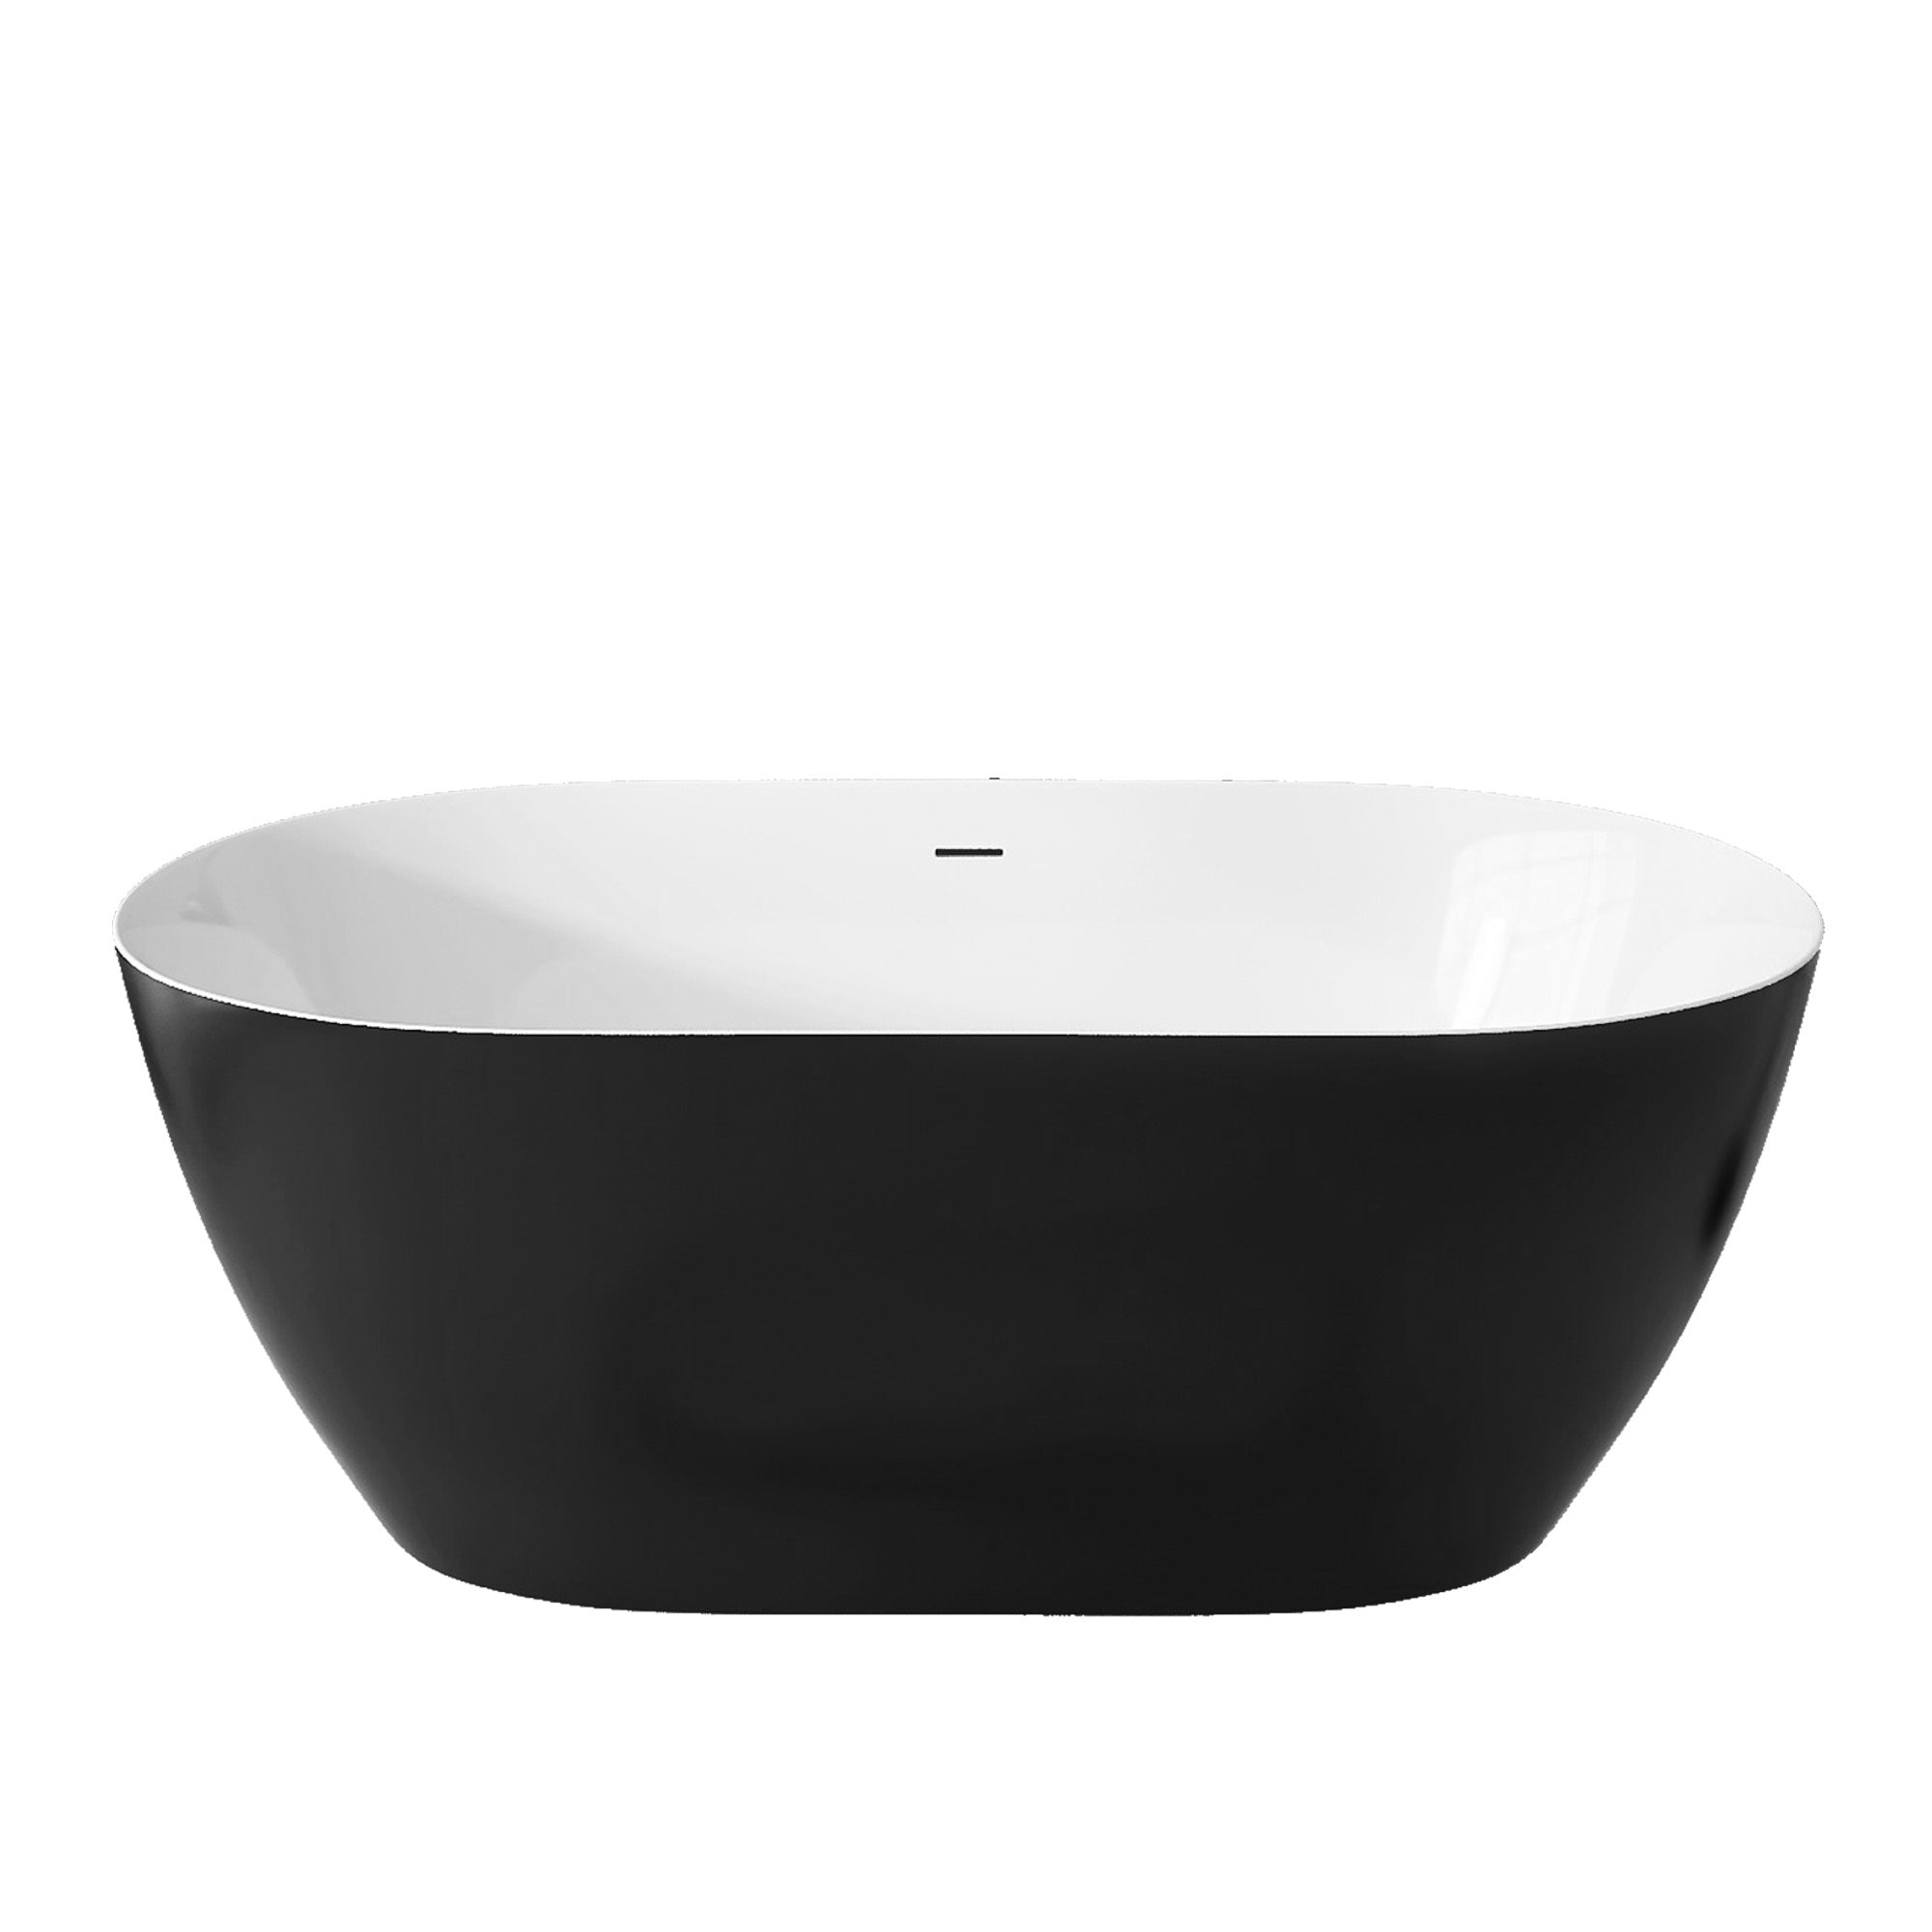 67" Acrylic Free Standing Tub Modern Oval Shape